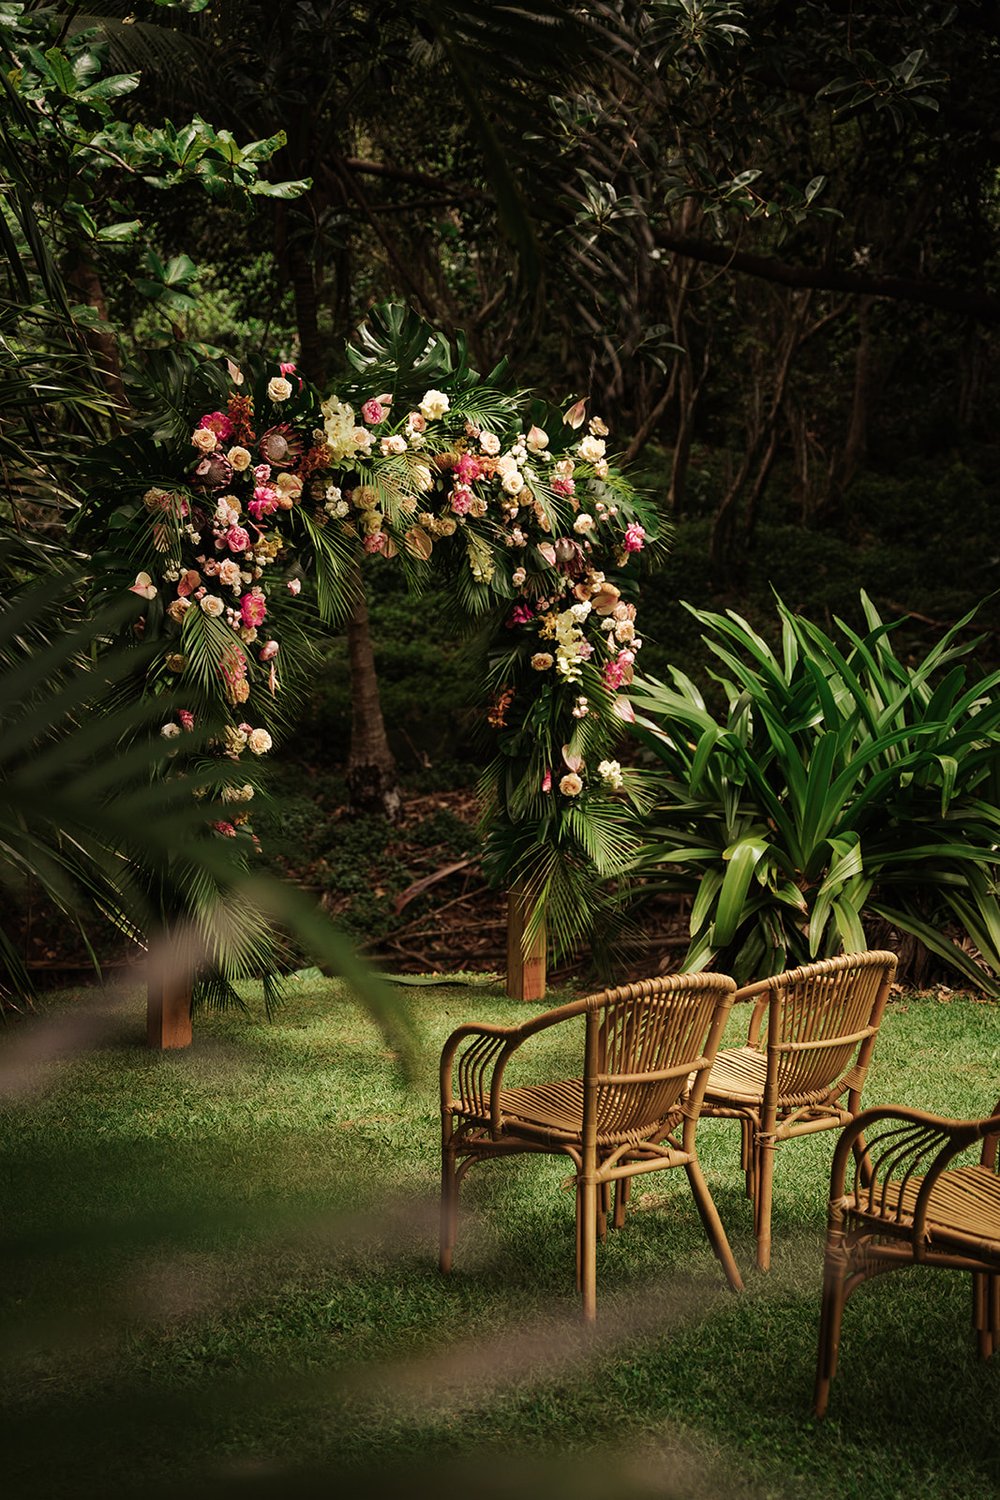 Petite Floral Arrangement — Moss Floral Design, Destination Wedding Florist  based in Dallas Fort Worth Wedding Florist